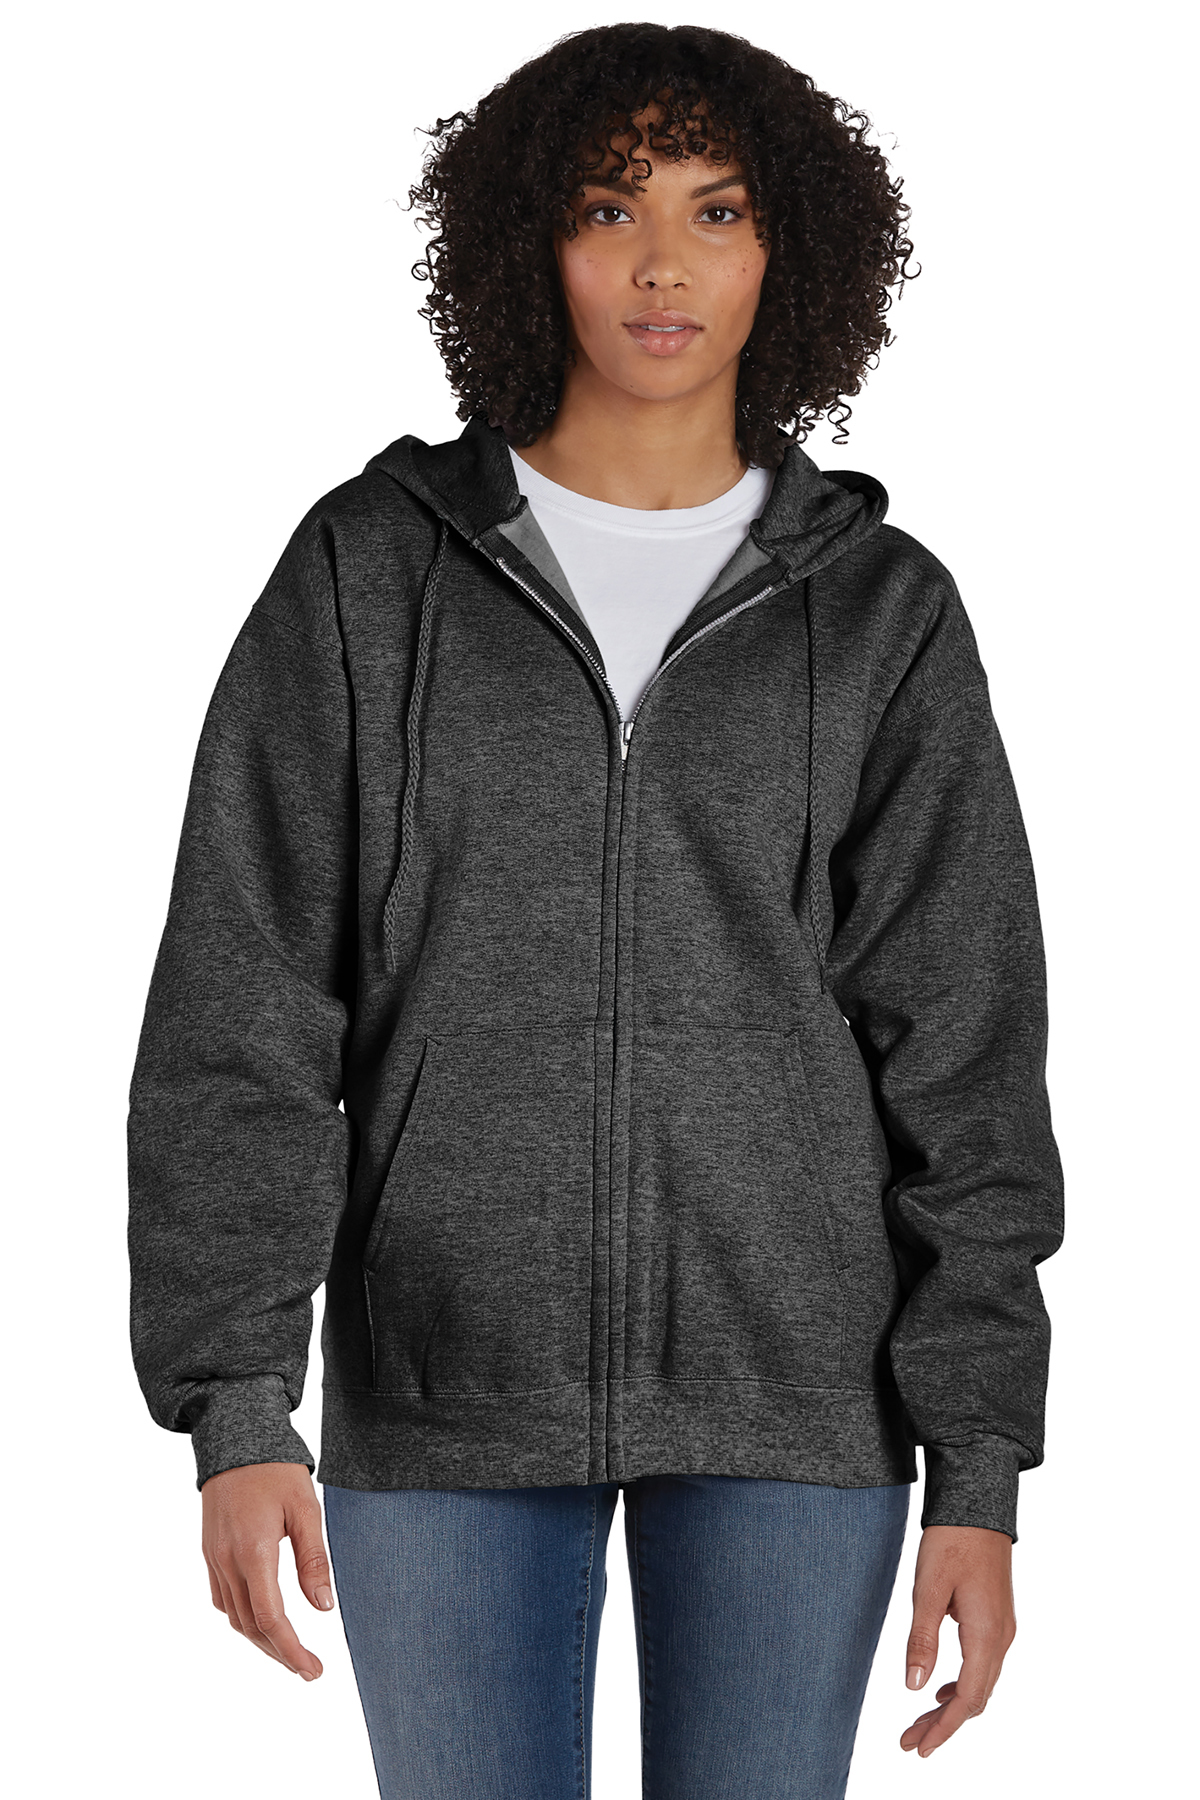 Hanes Ultimate Cotton - Full-Zip Hooded Sweatshirt | Product | Company ...